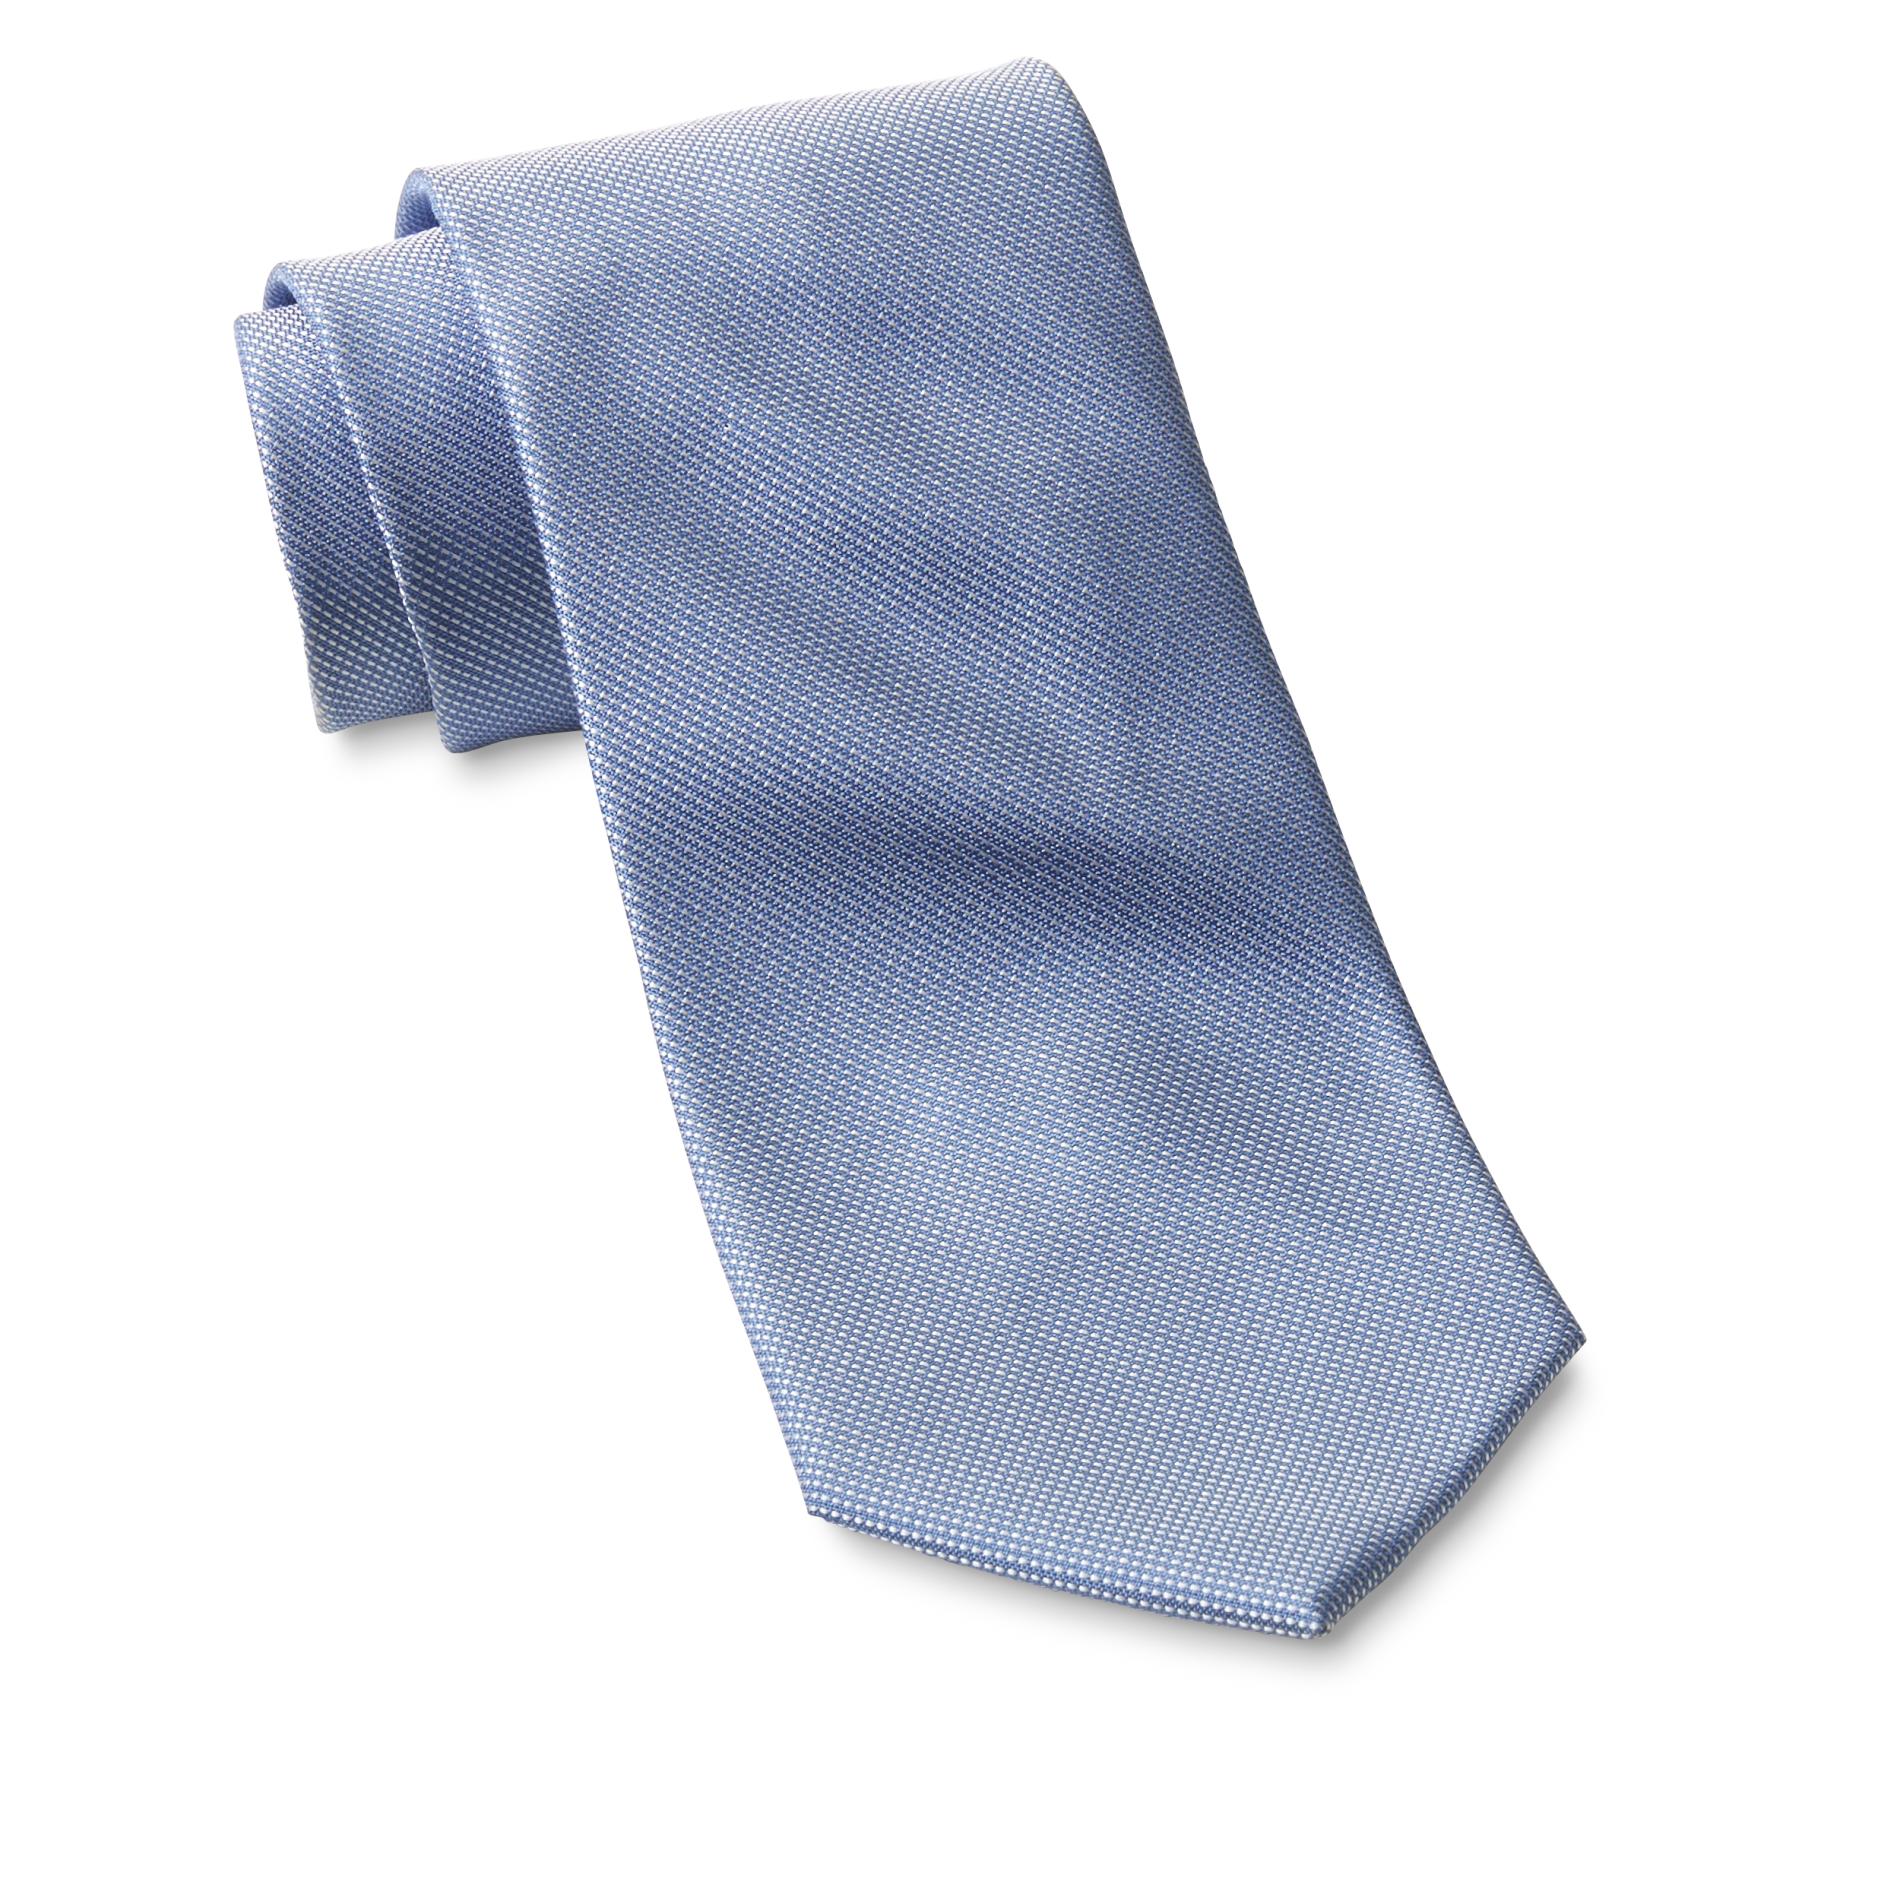 Covington Men's Necktie - Micro Dot